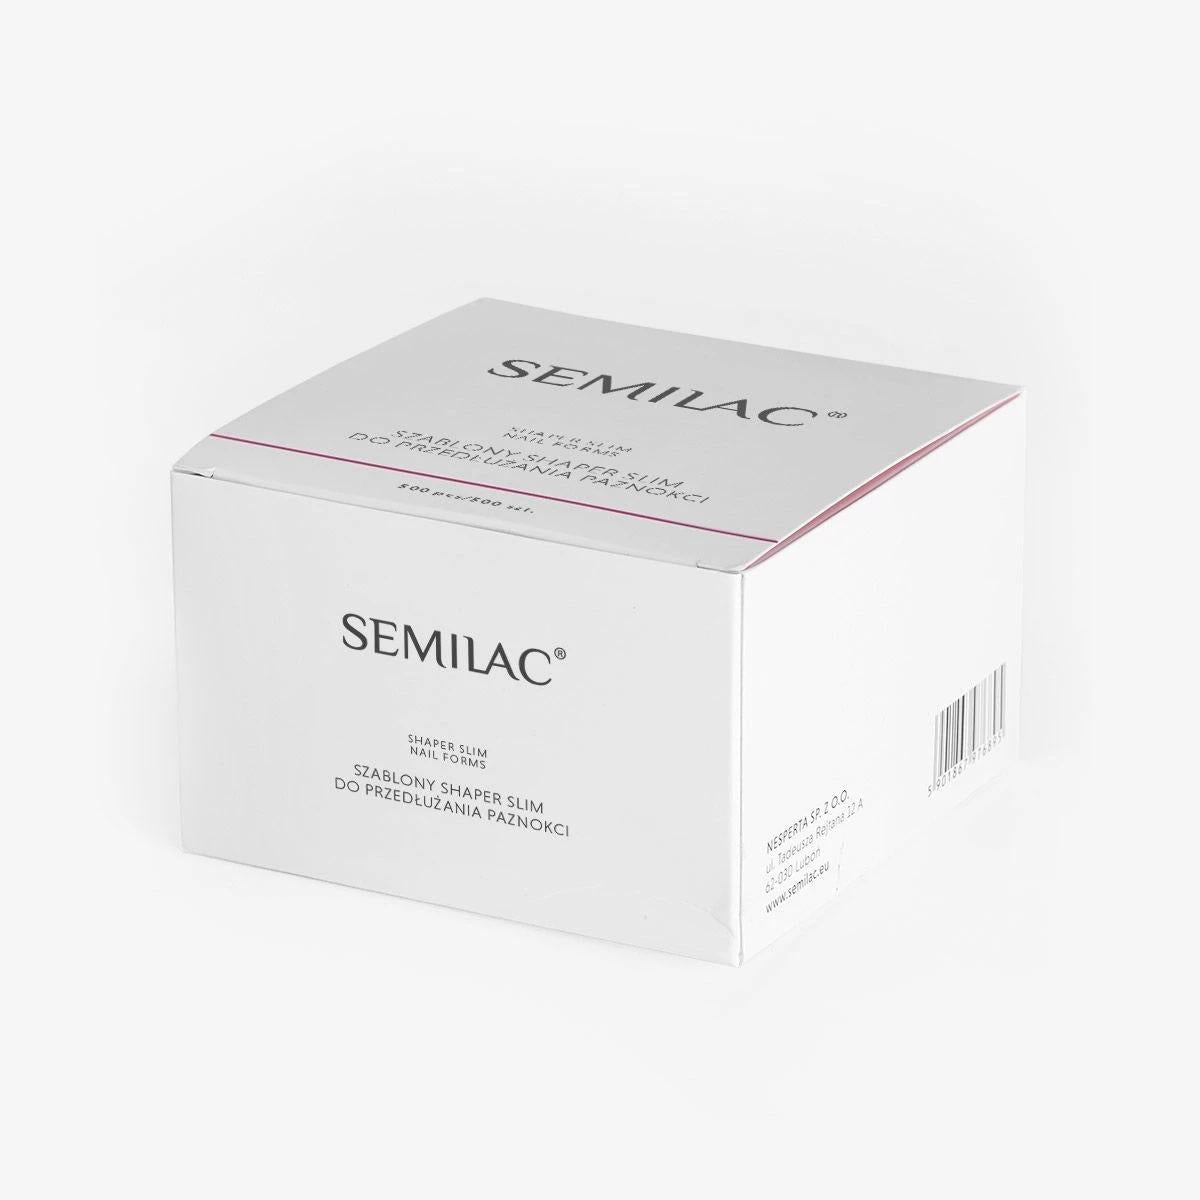 Semilac Shaper Slim Nail Forms 500 psc - Semilac UK